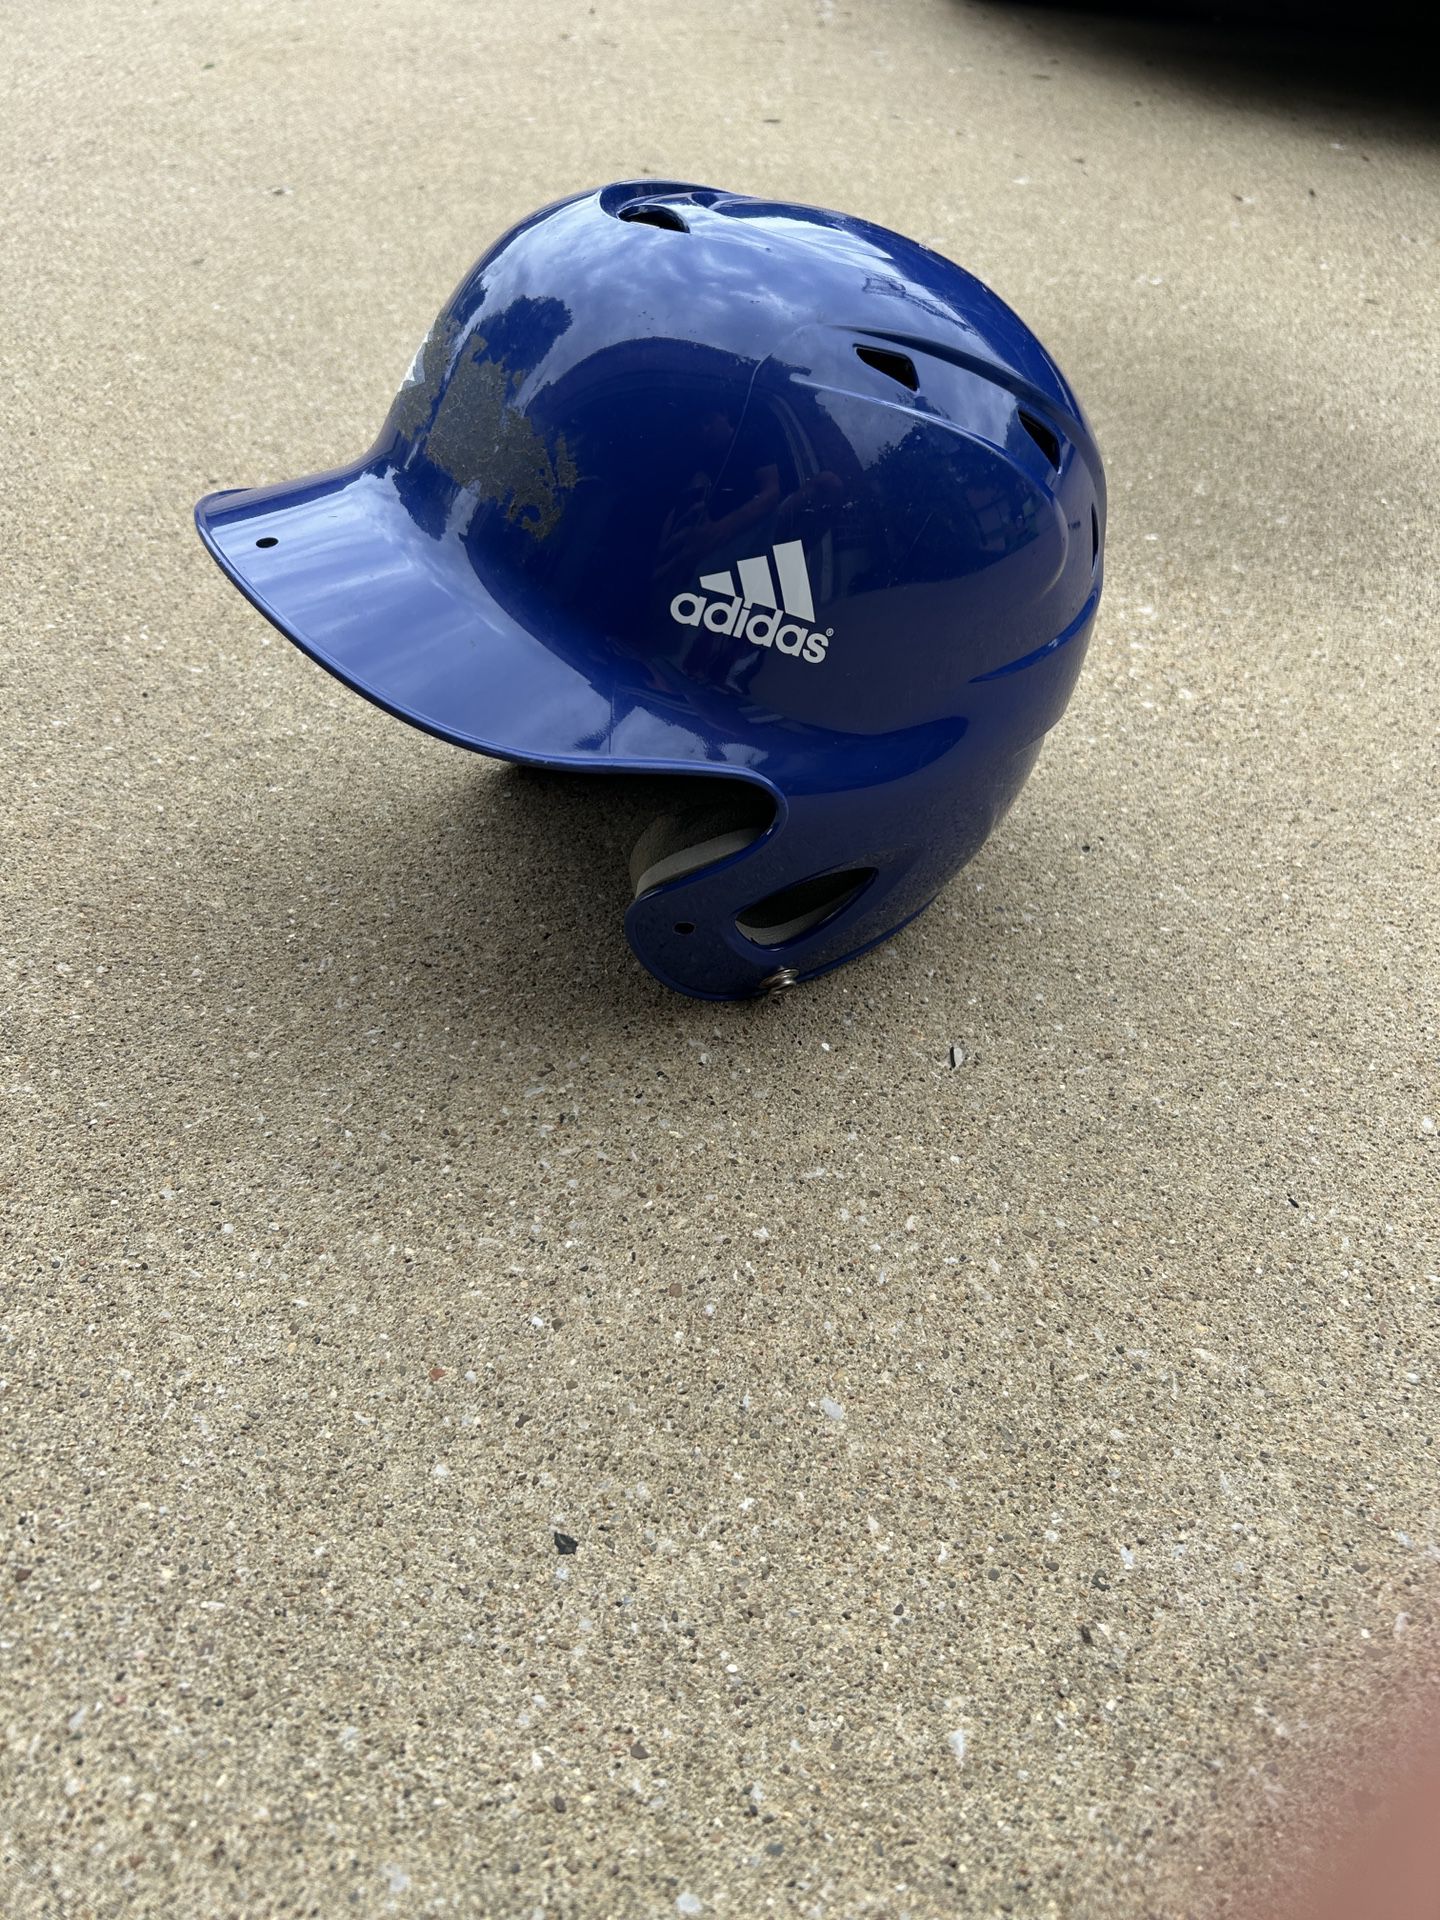 Youth Adidas and Rawlings Baseball Helmets